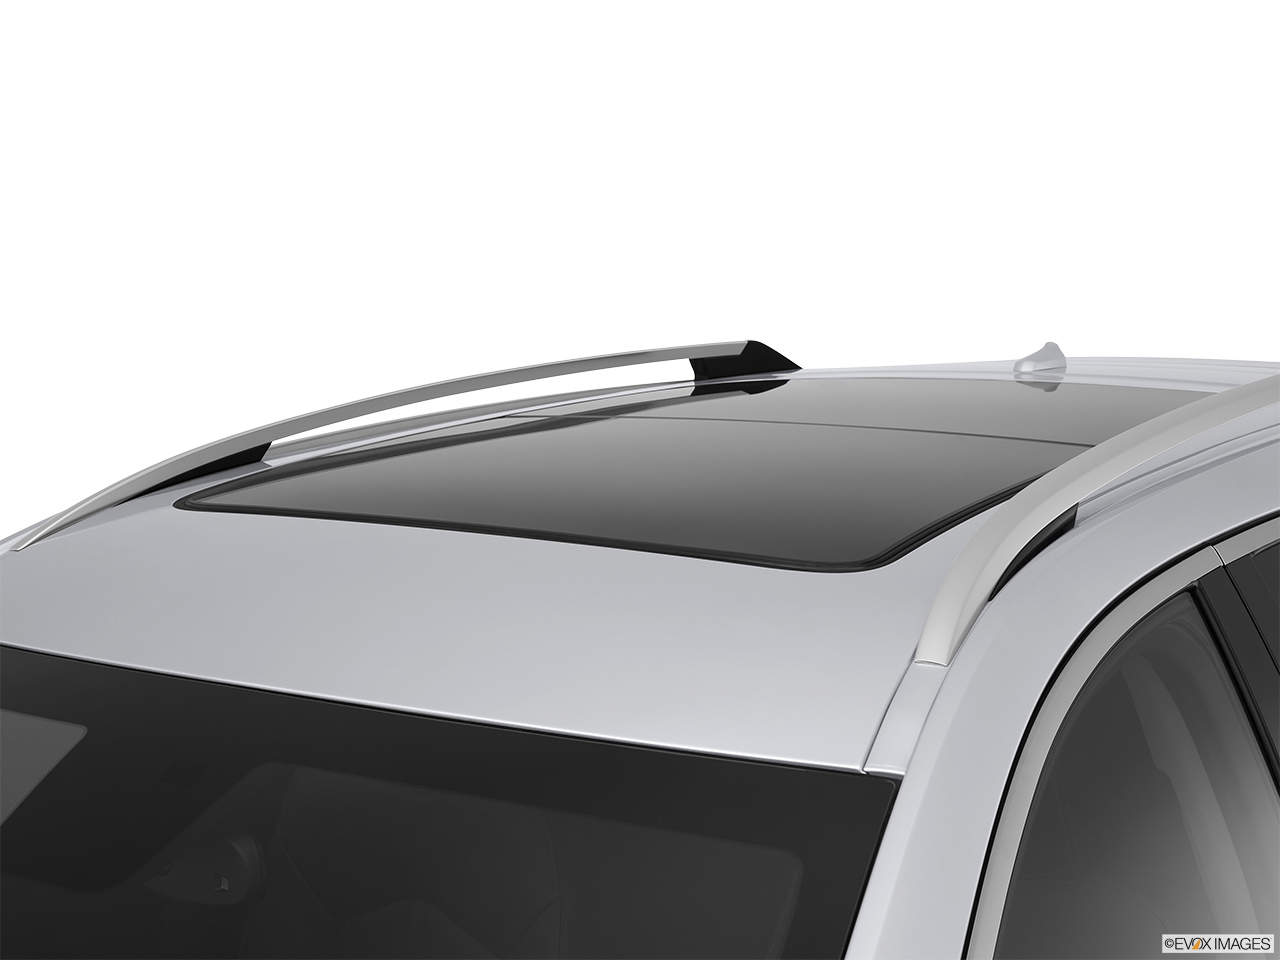 2012 Cadillac SRX Luxury Collection Sunroof/moonroof. 